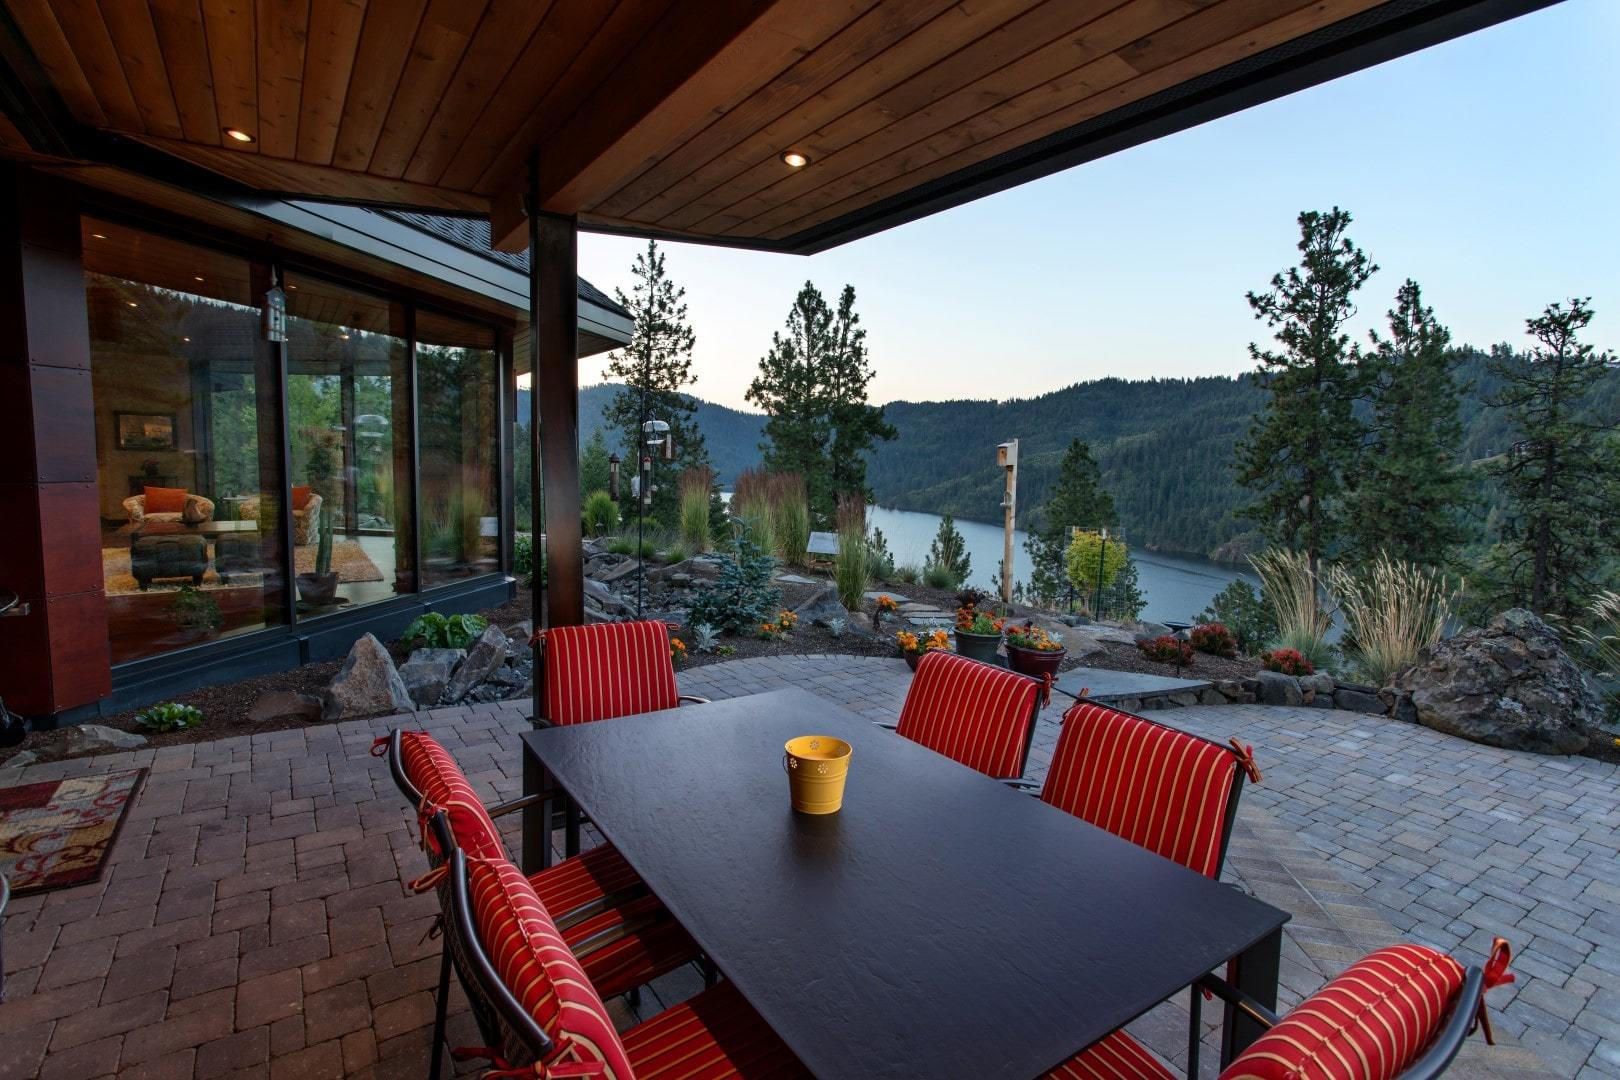 Lake Fernan Residence - Passive House Institute Certified